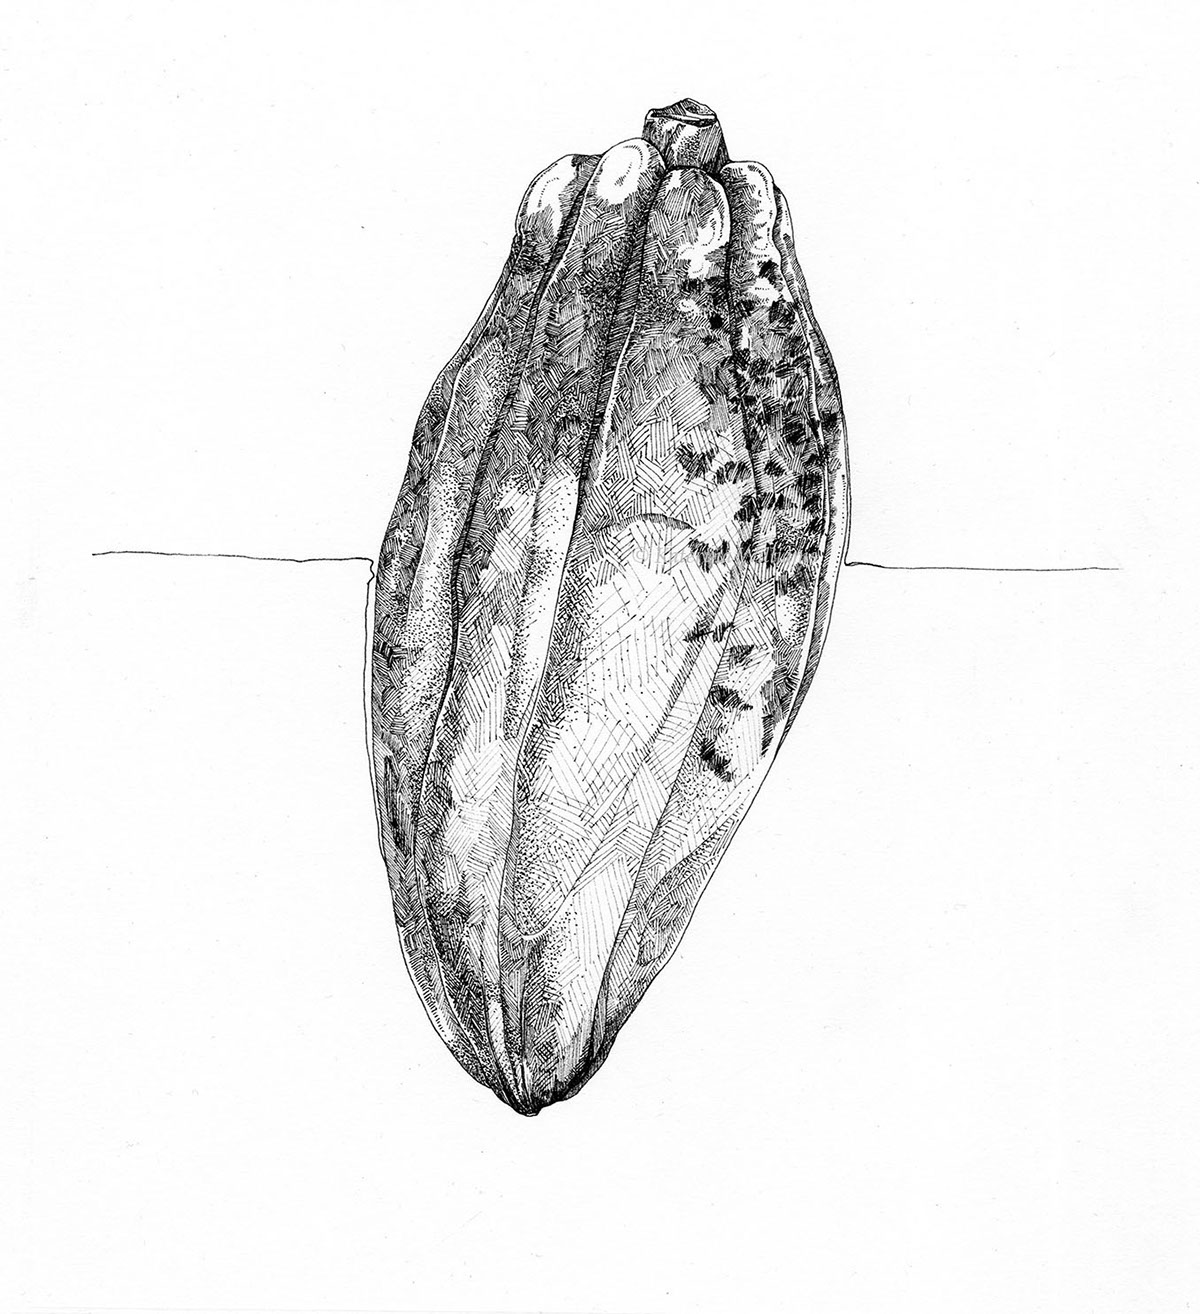 illustrations line drawing pen Nature black and white hand drawn micron botanical illustration